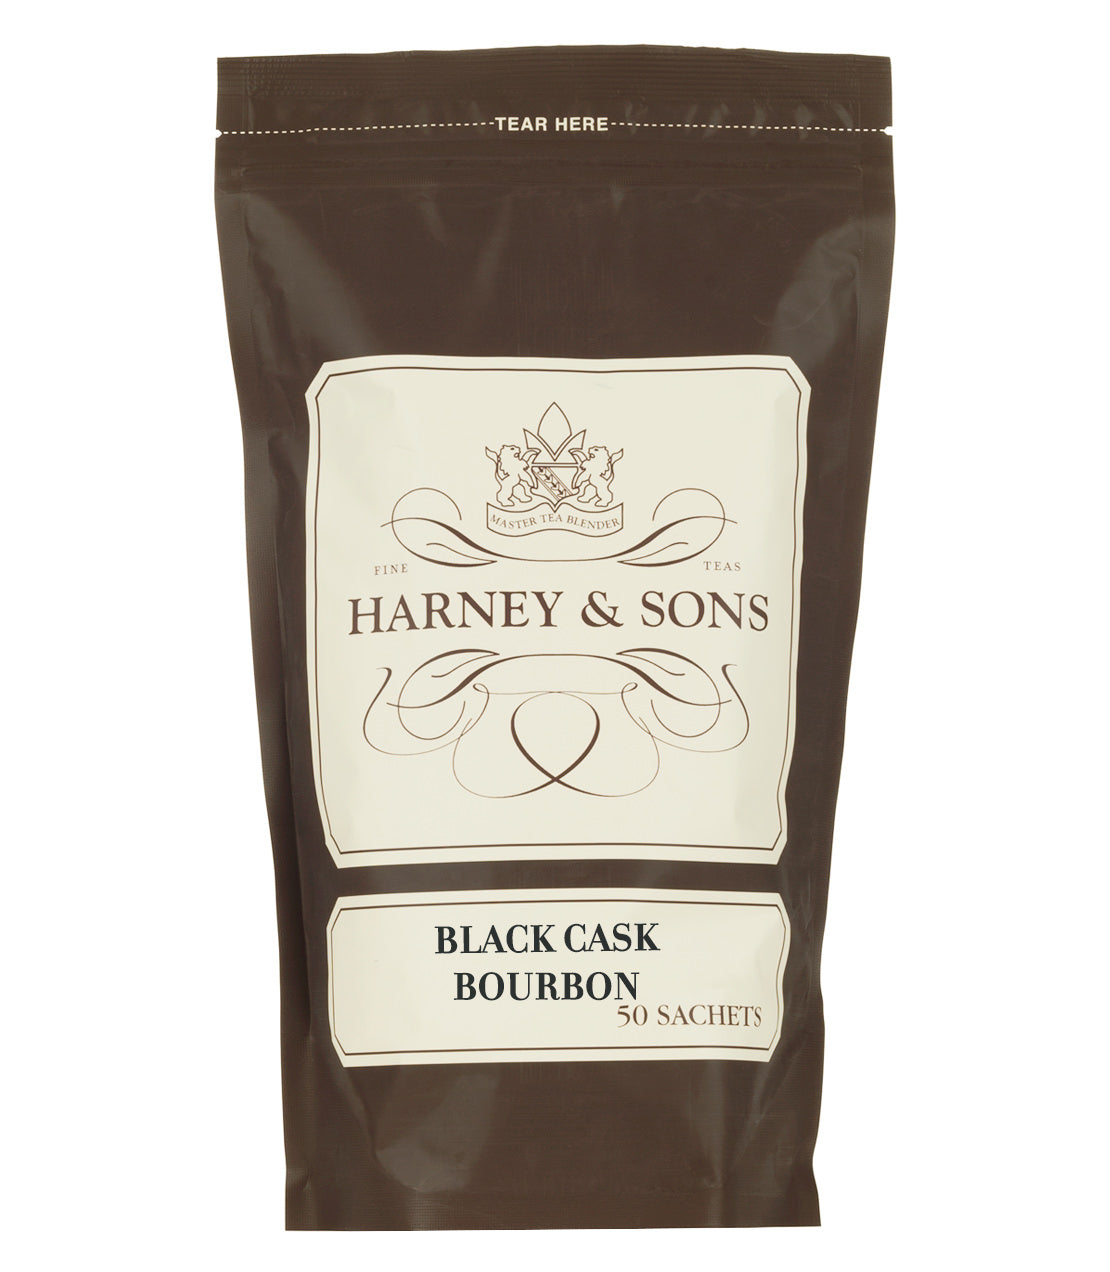 Black Cask Bourbon - Sachets Bag of 50 Sachets - Harney & Sons Fine Teas